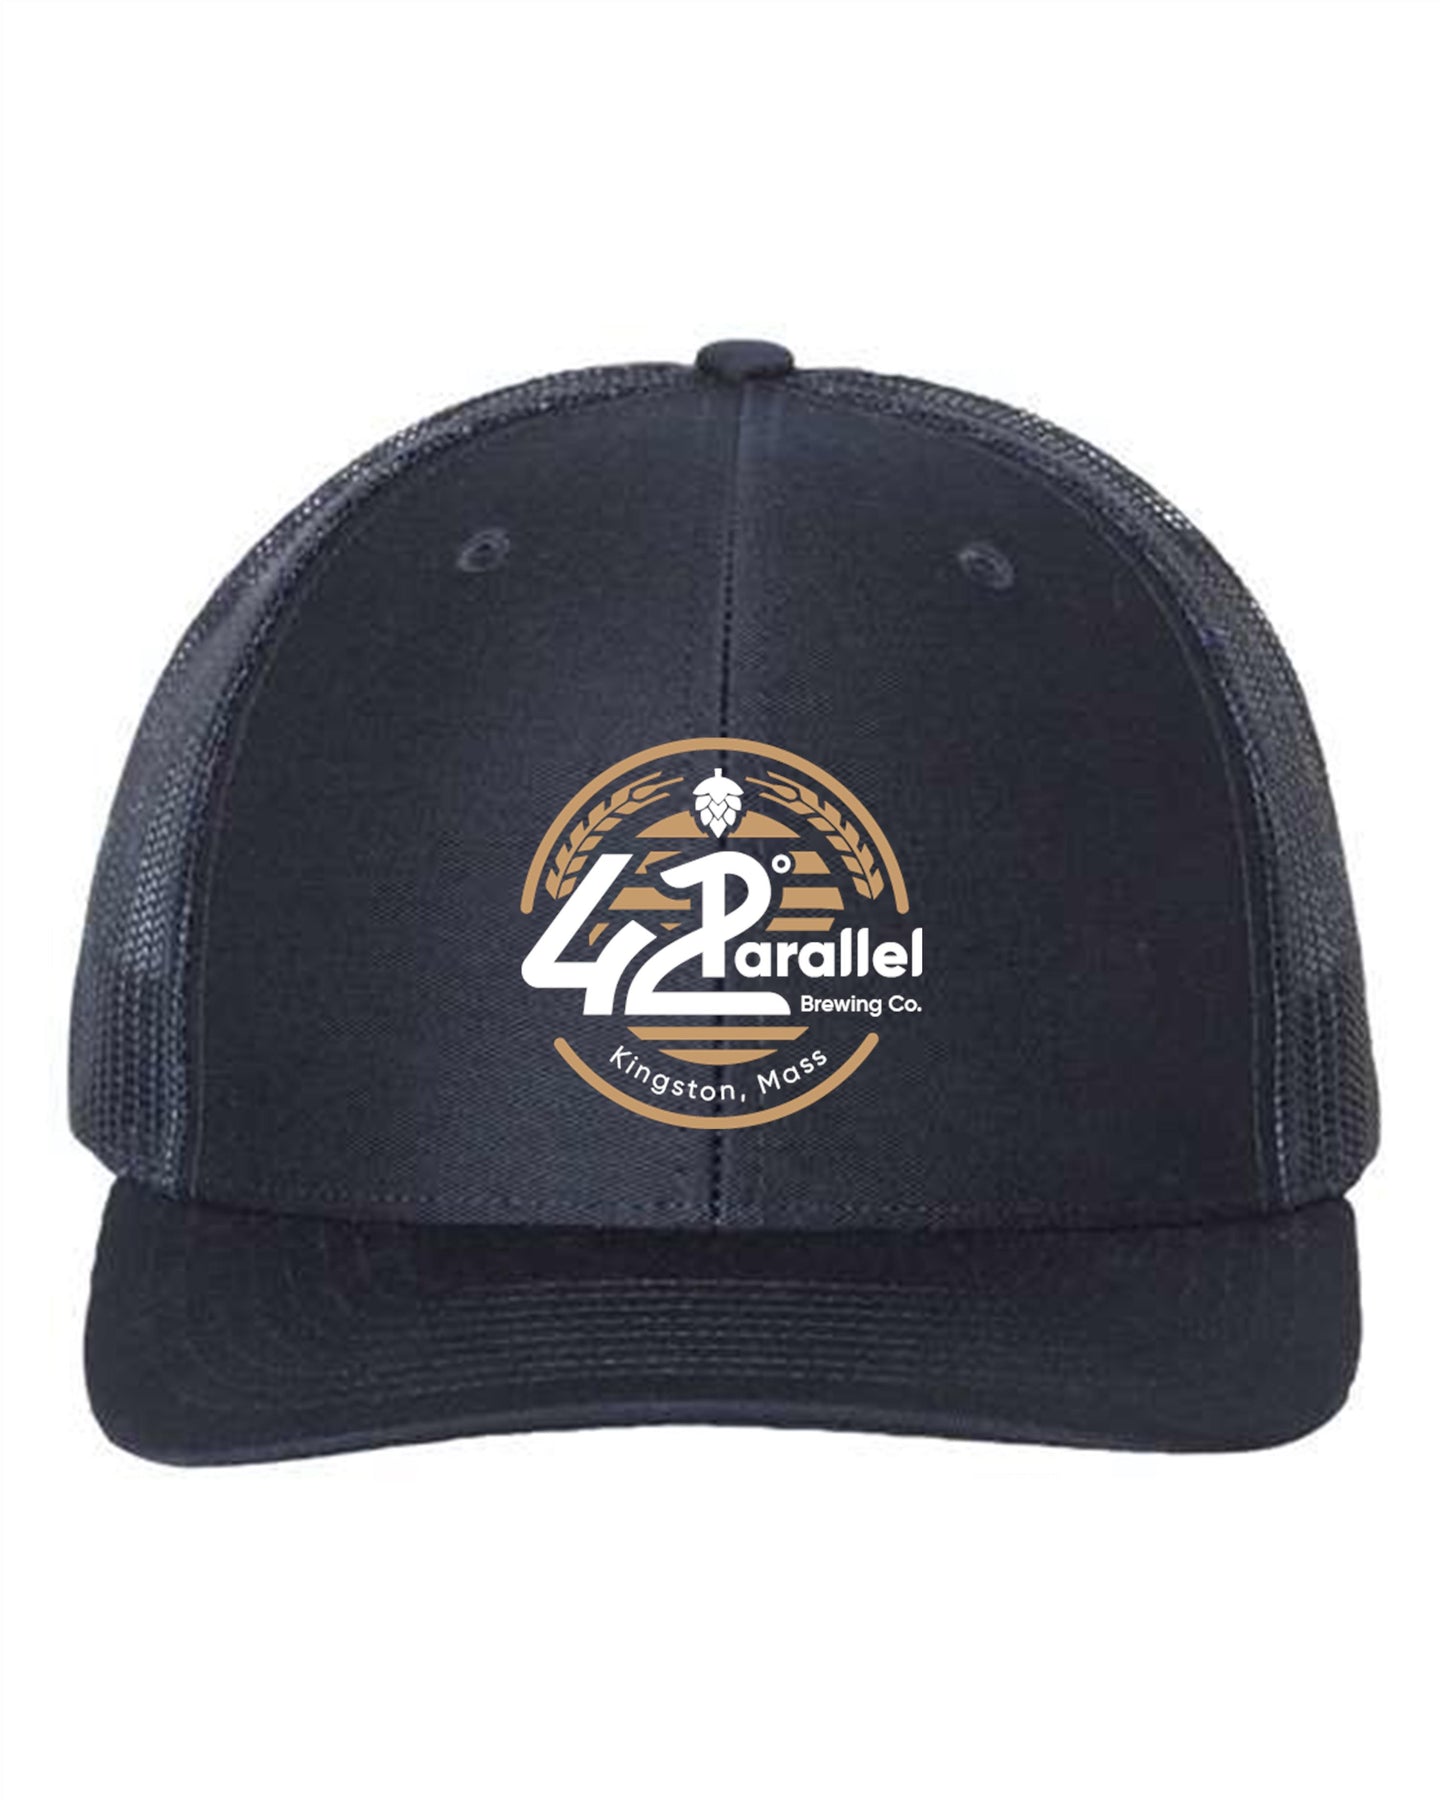 42 Trucker Hat